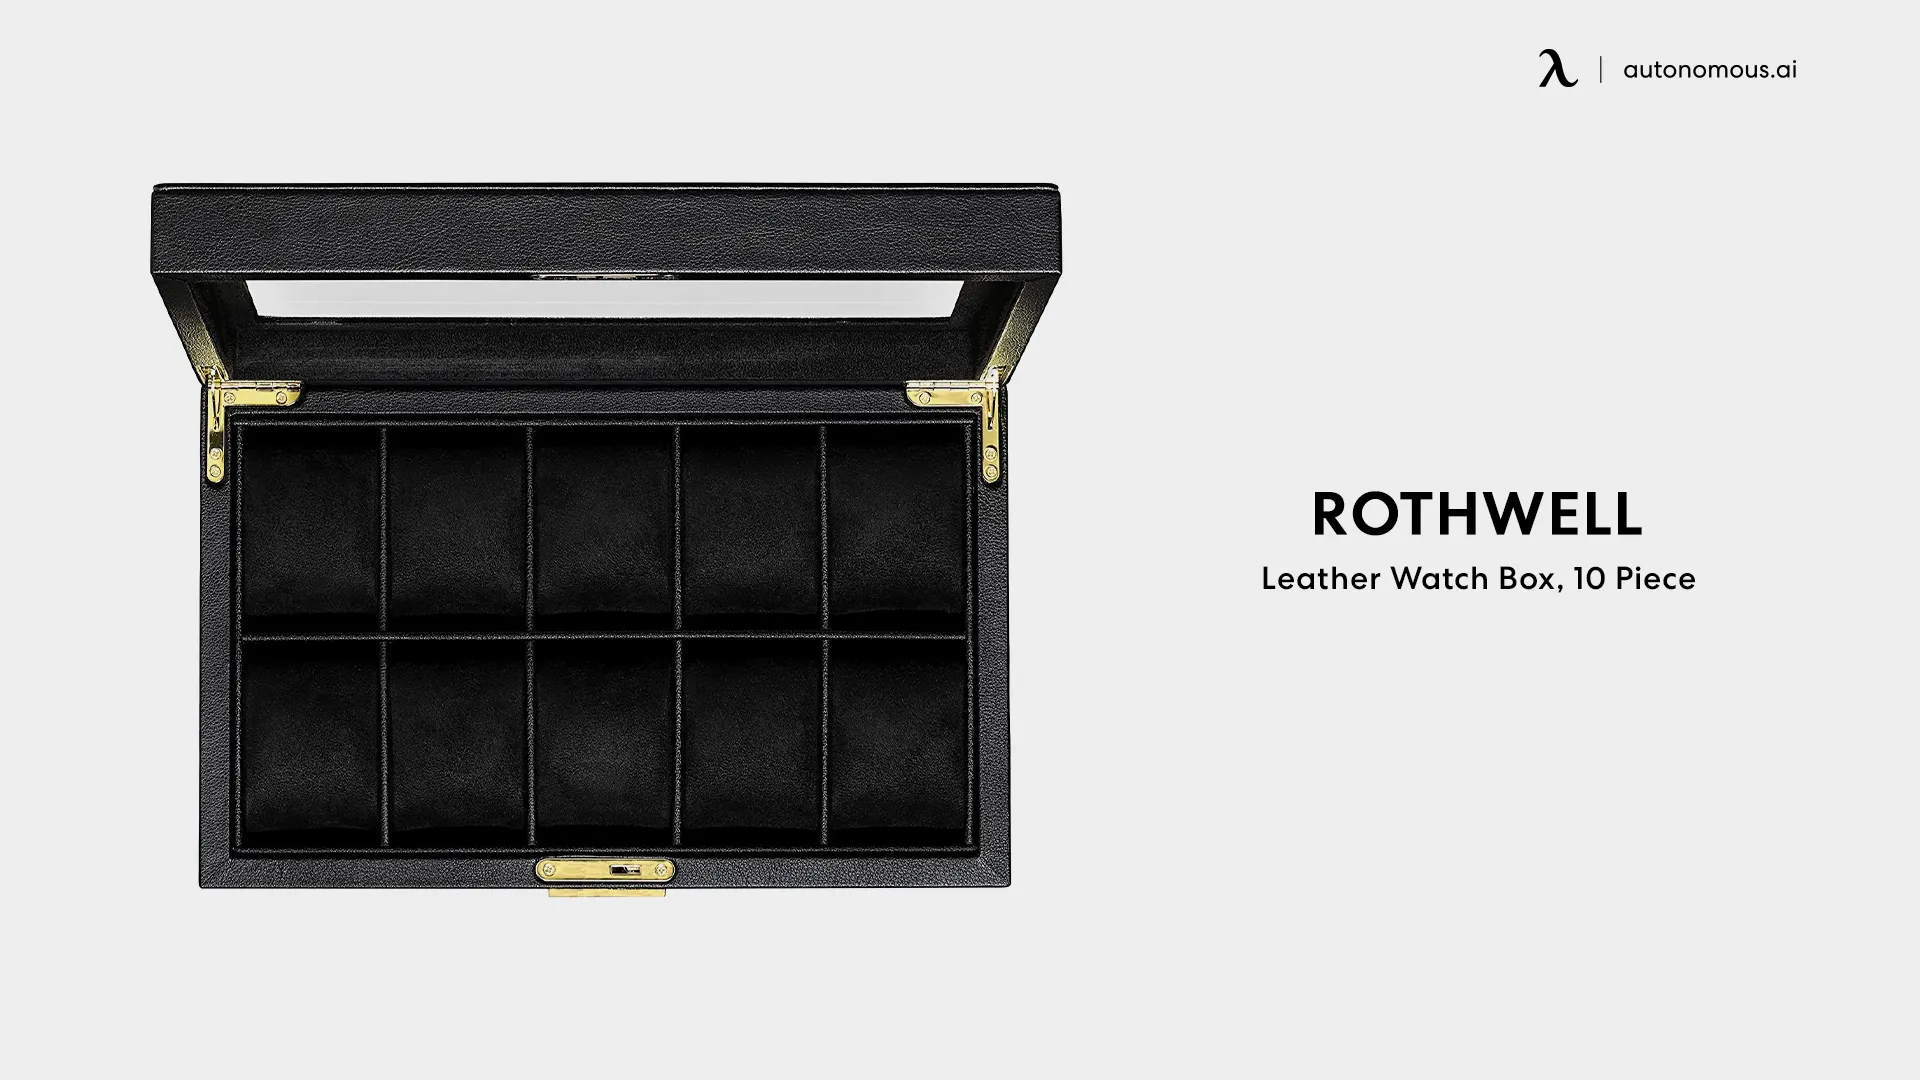 Rothwell's Leather Watch Box, 10 Piece